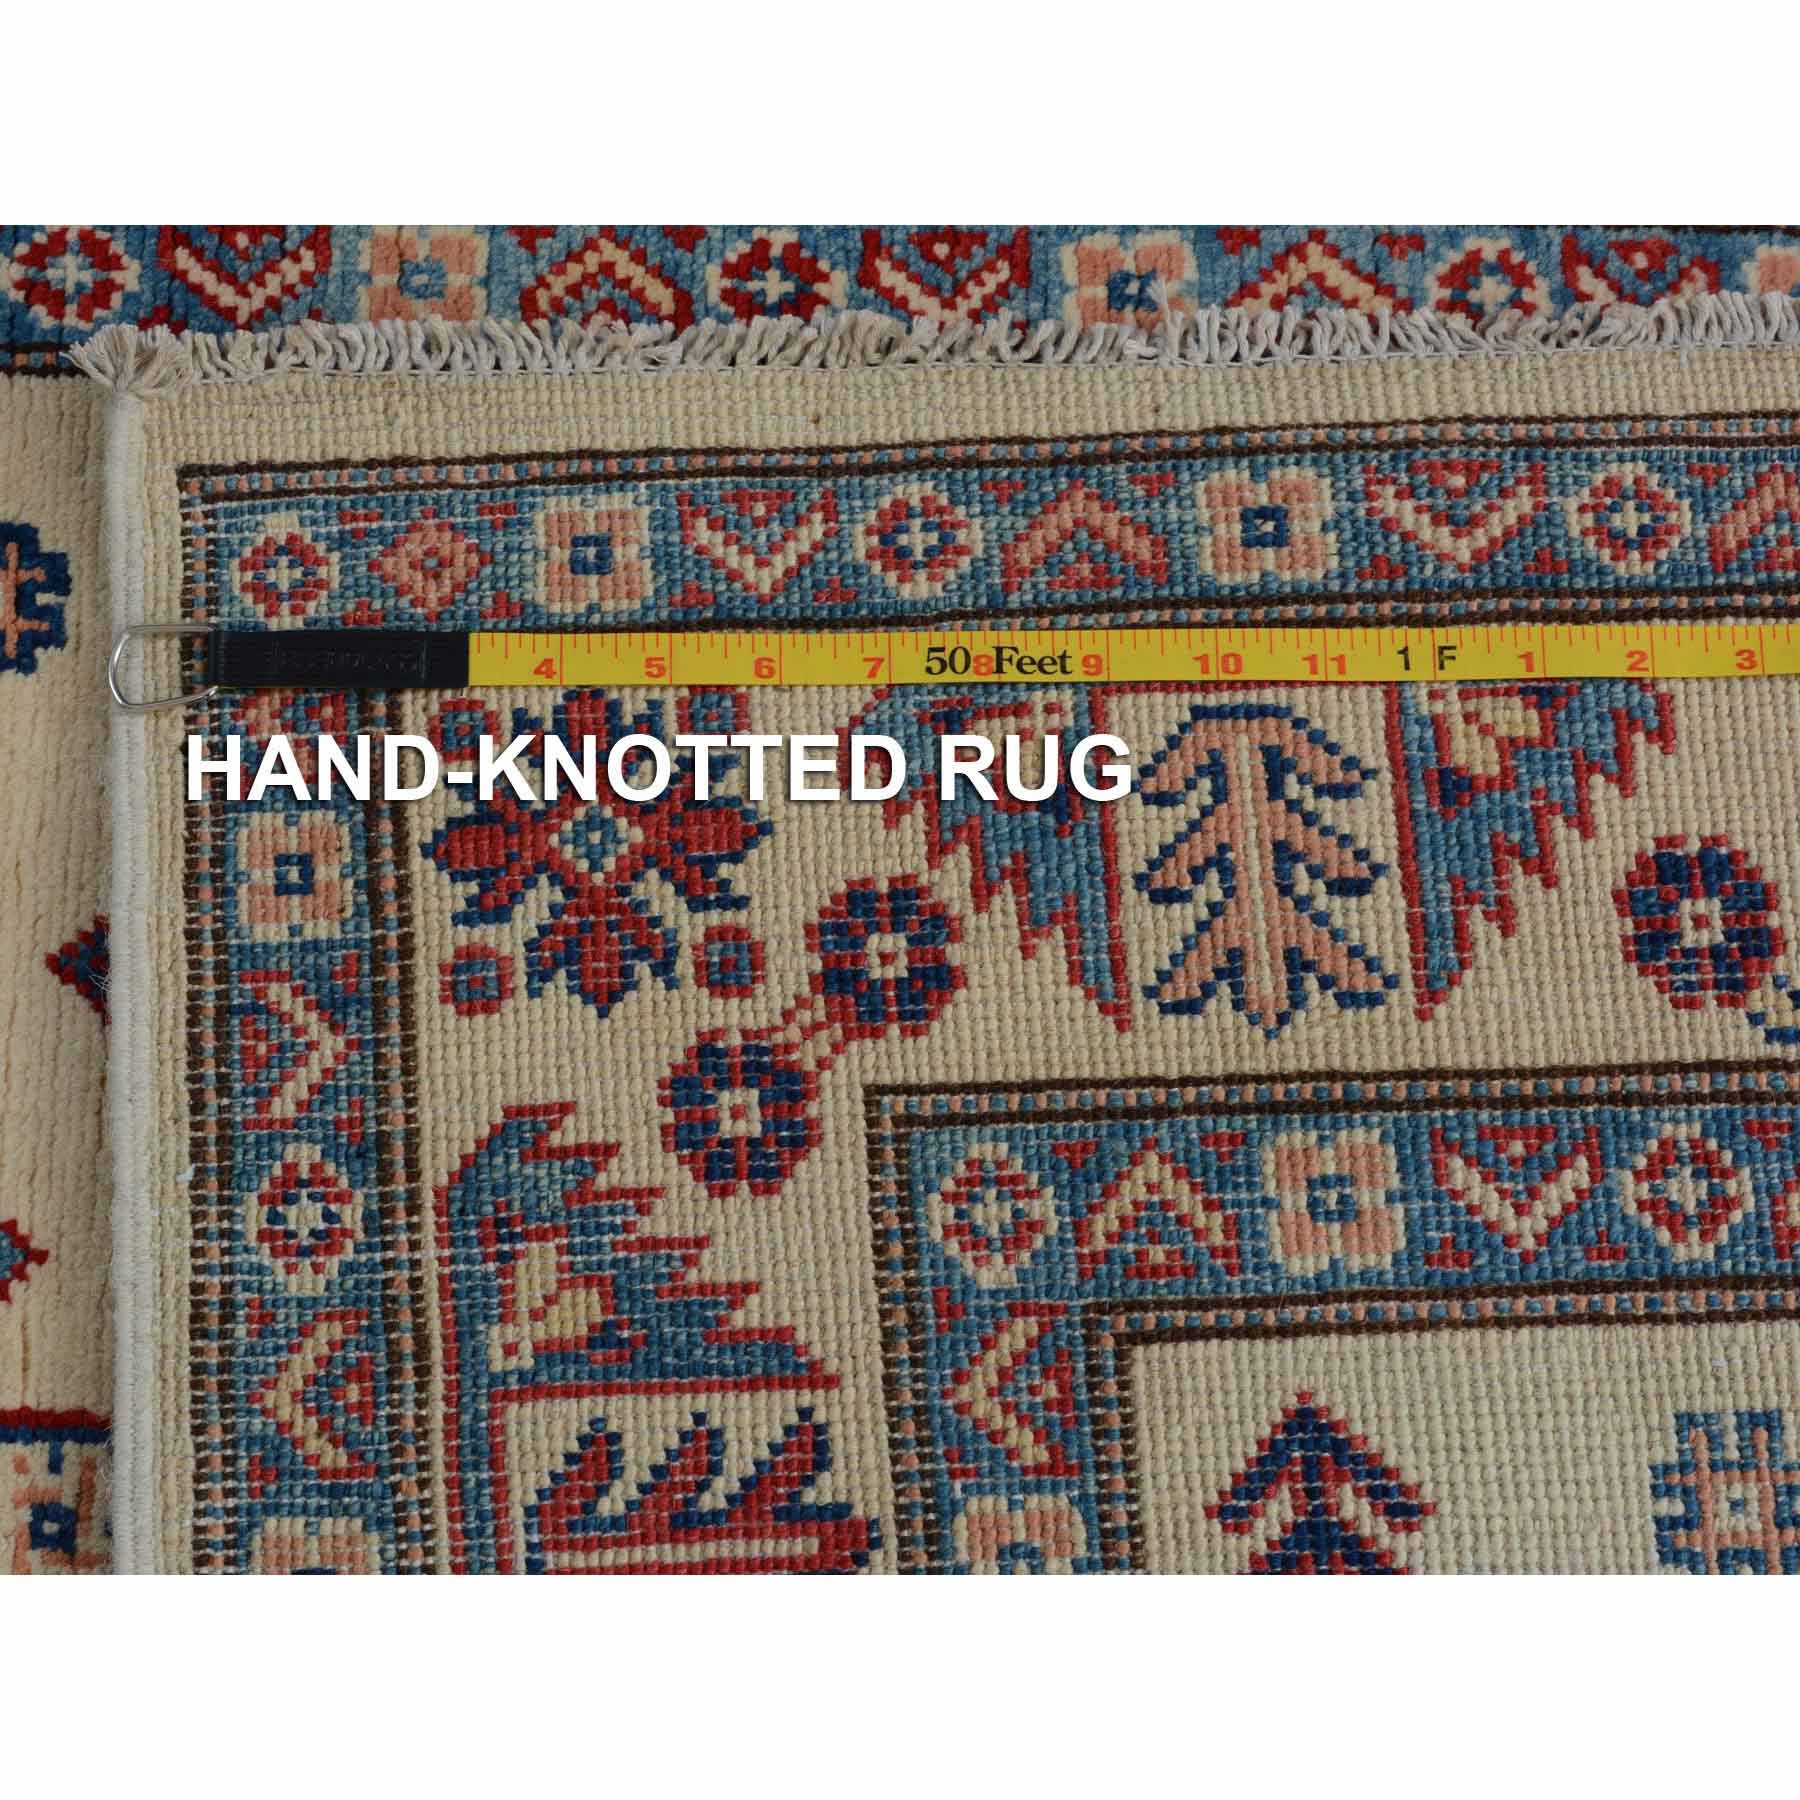 Kazak-Hand-Knotted-Rug-285405